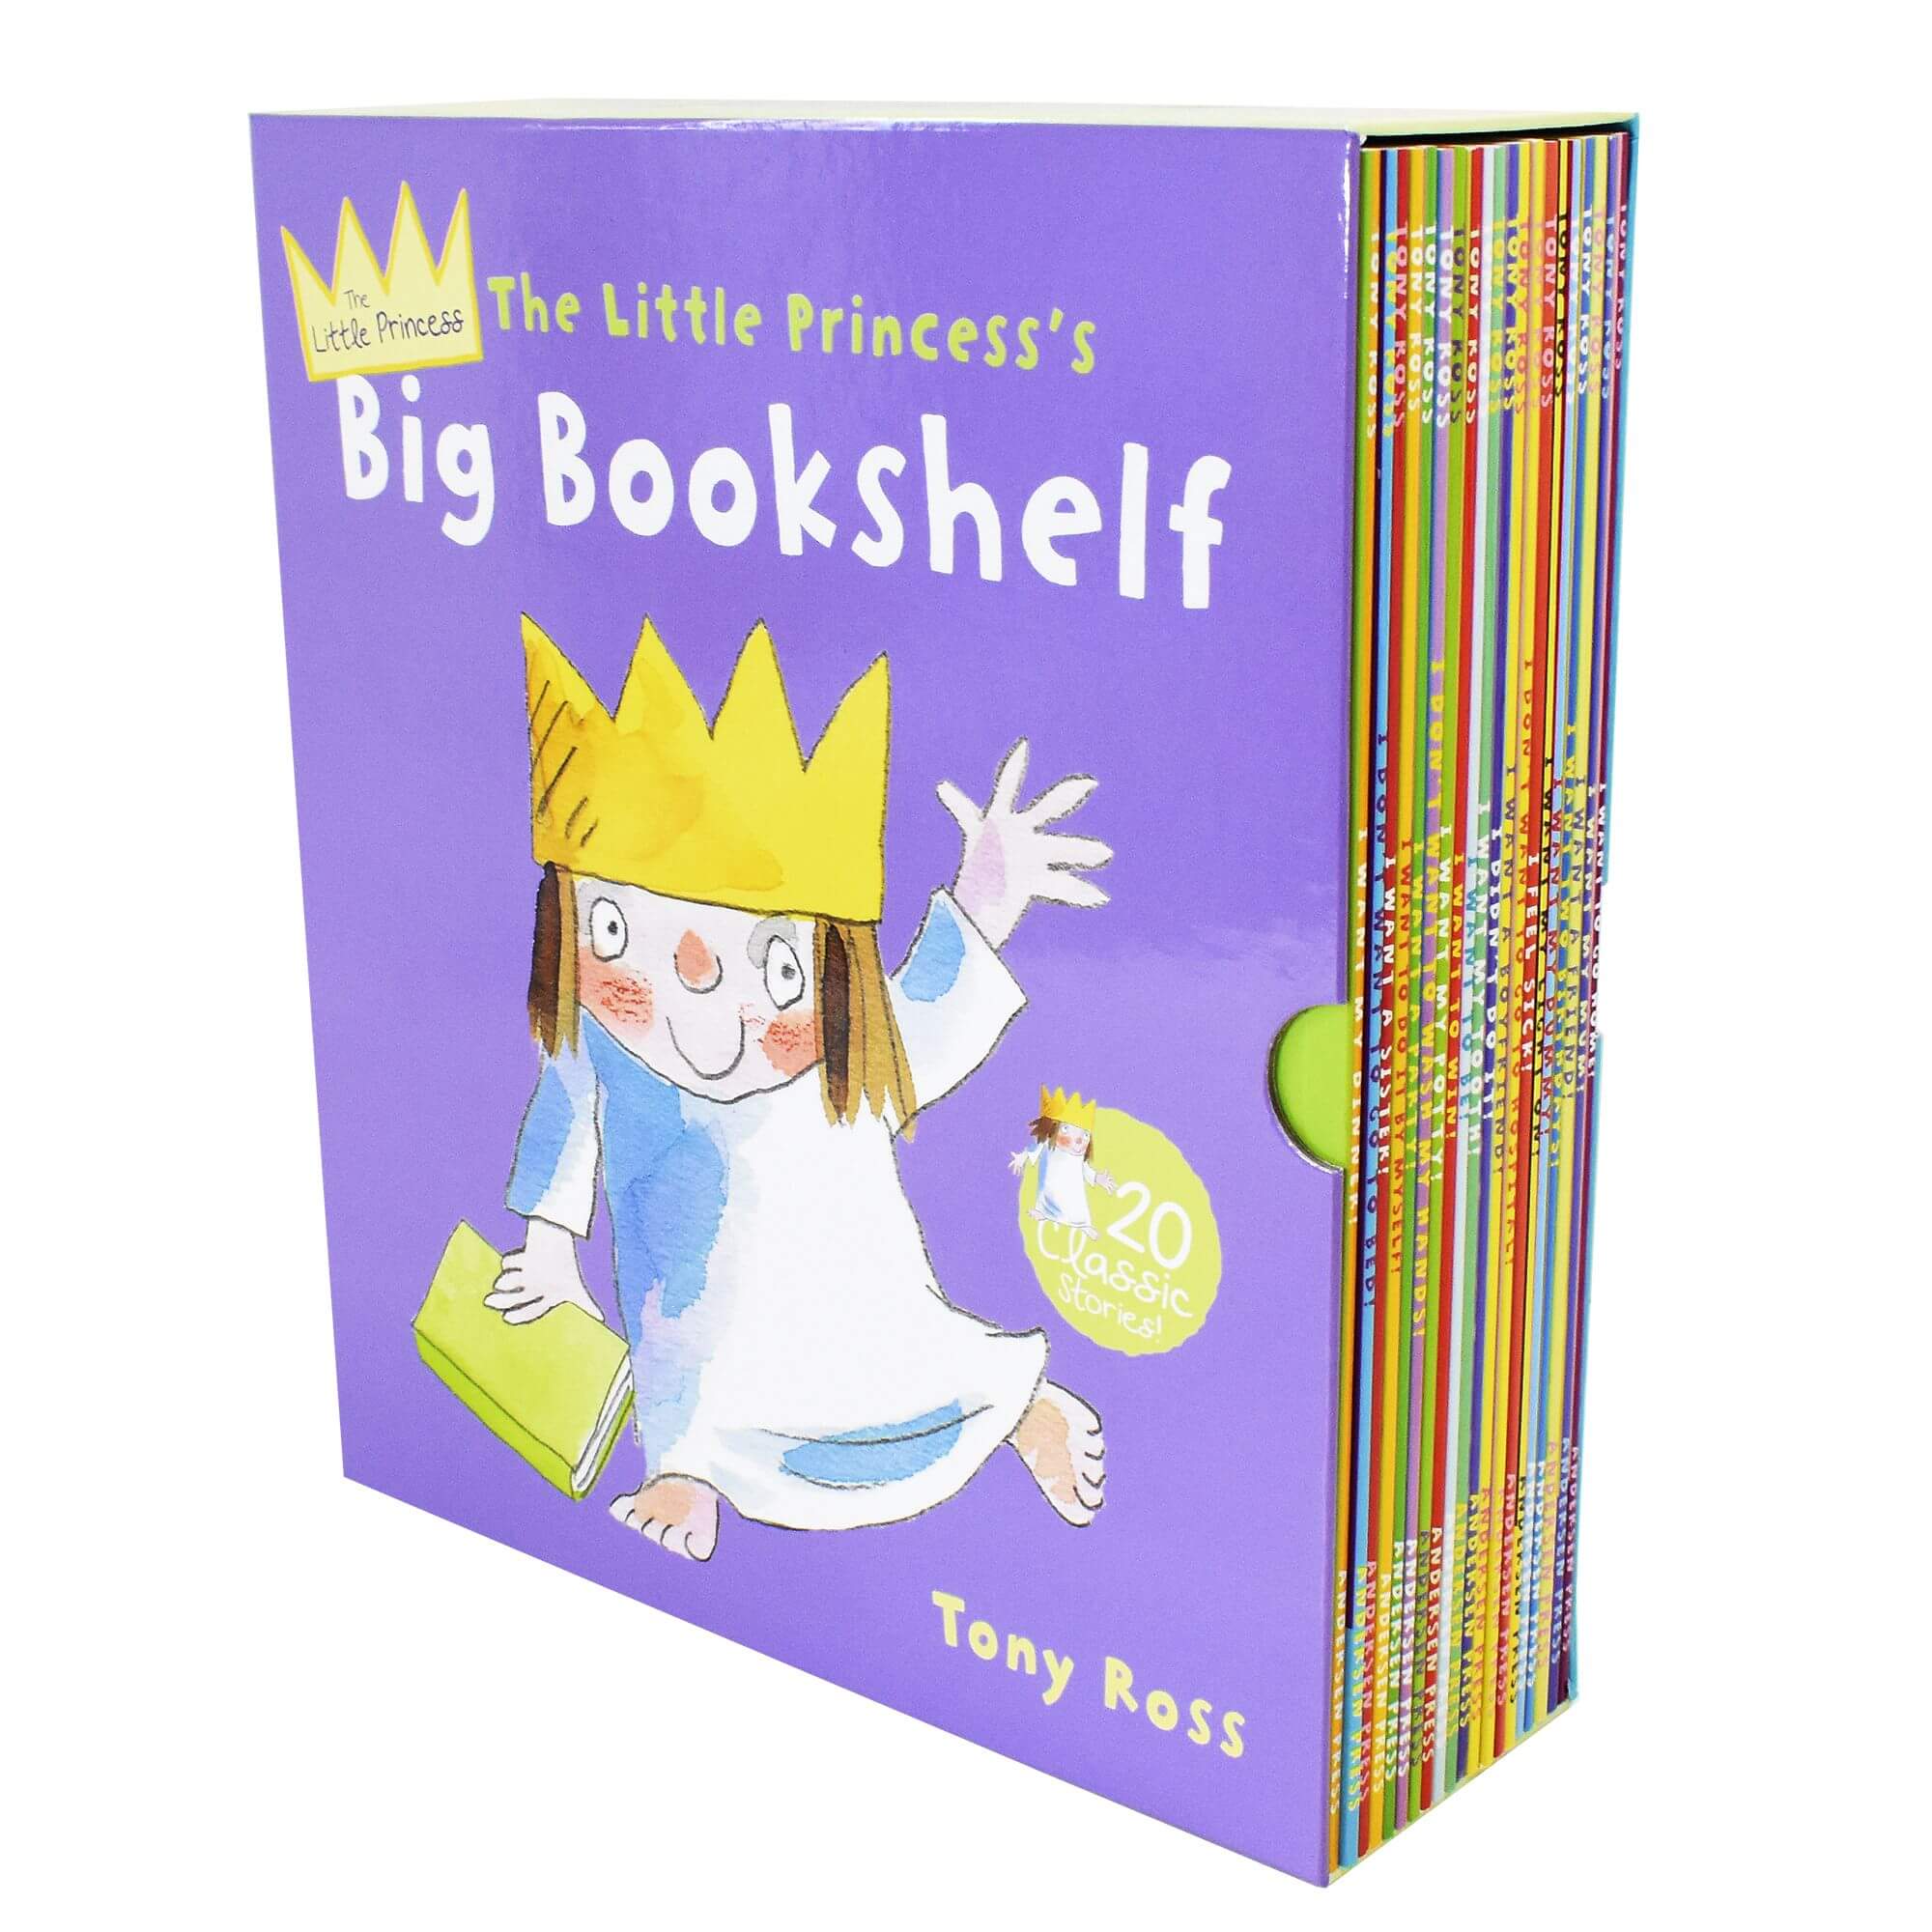 The Little Princess's Big Bookshelf - 20 Books